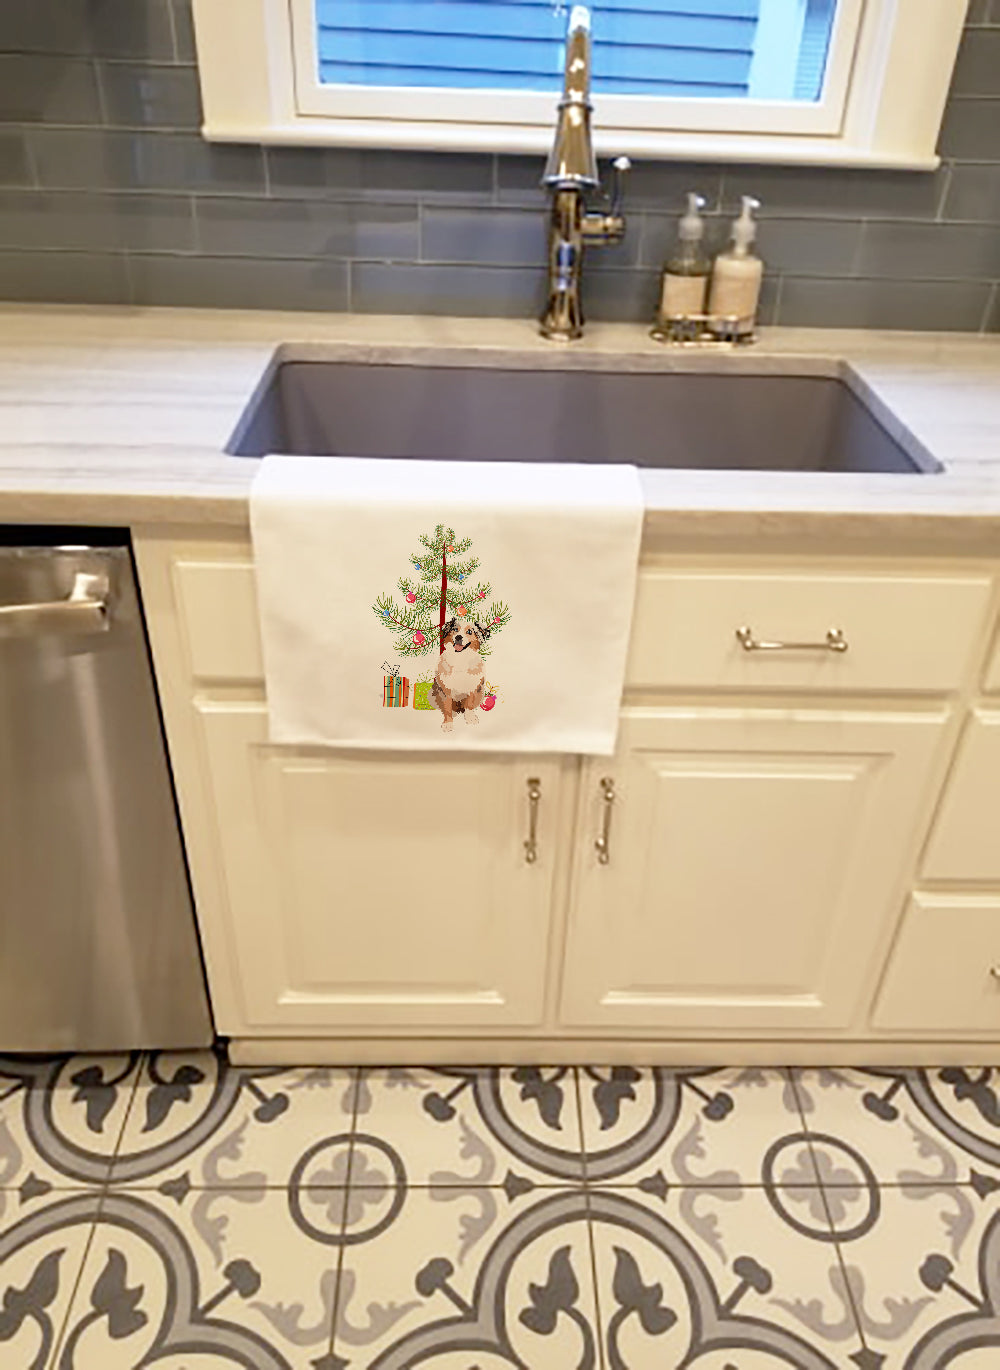 Buy this Australian Shepherd Red Merle Tricolor #2 Christmas White Kitchen Towel Set of 2